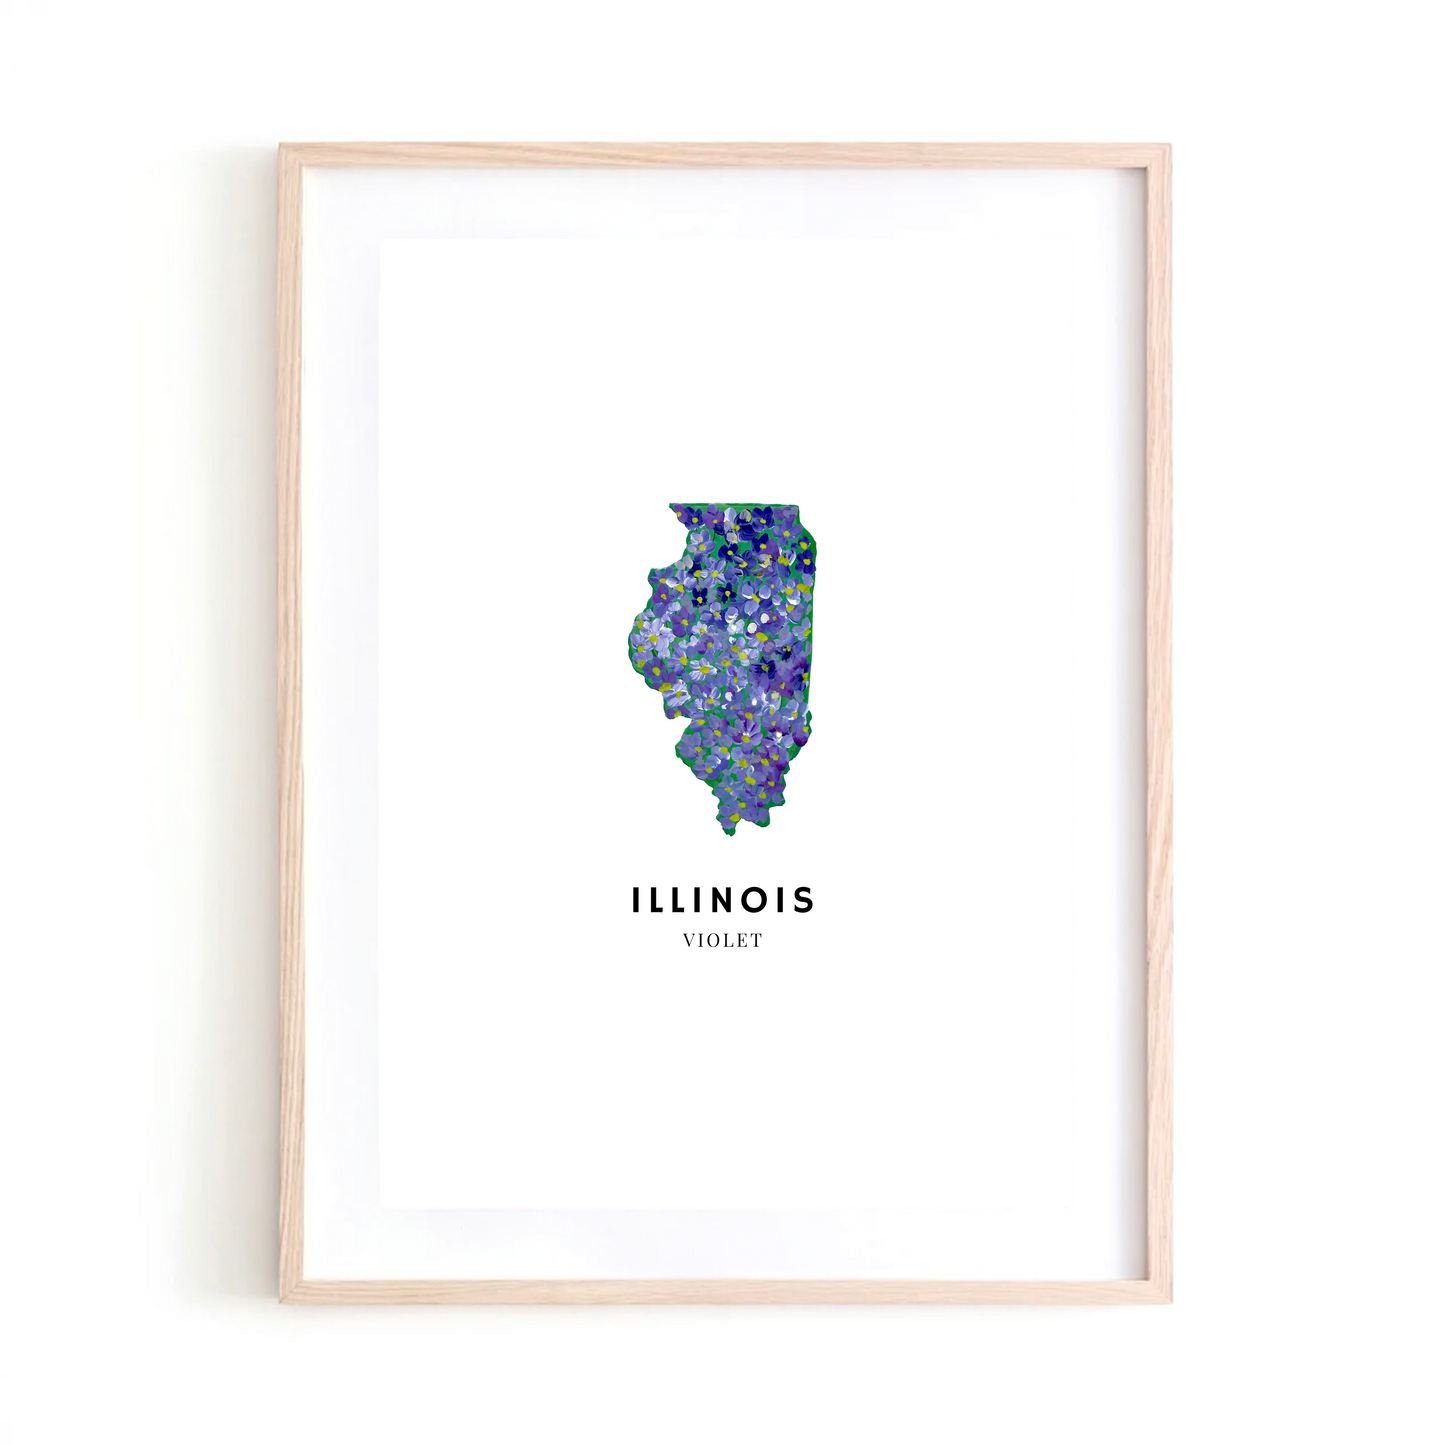 Illinois State Flower art print